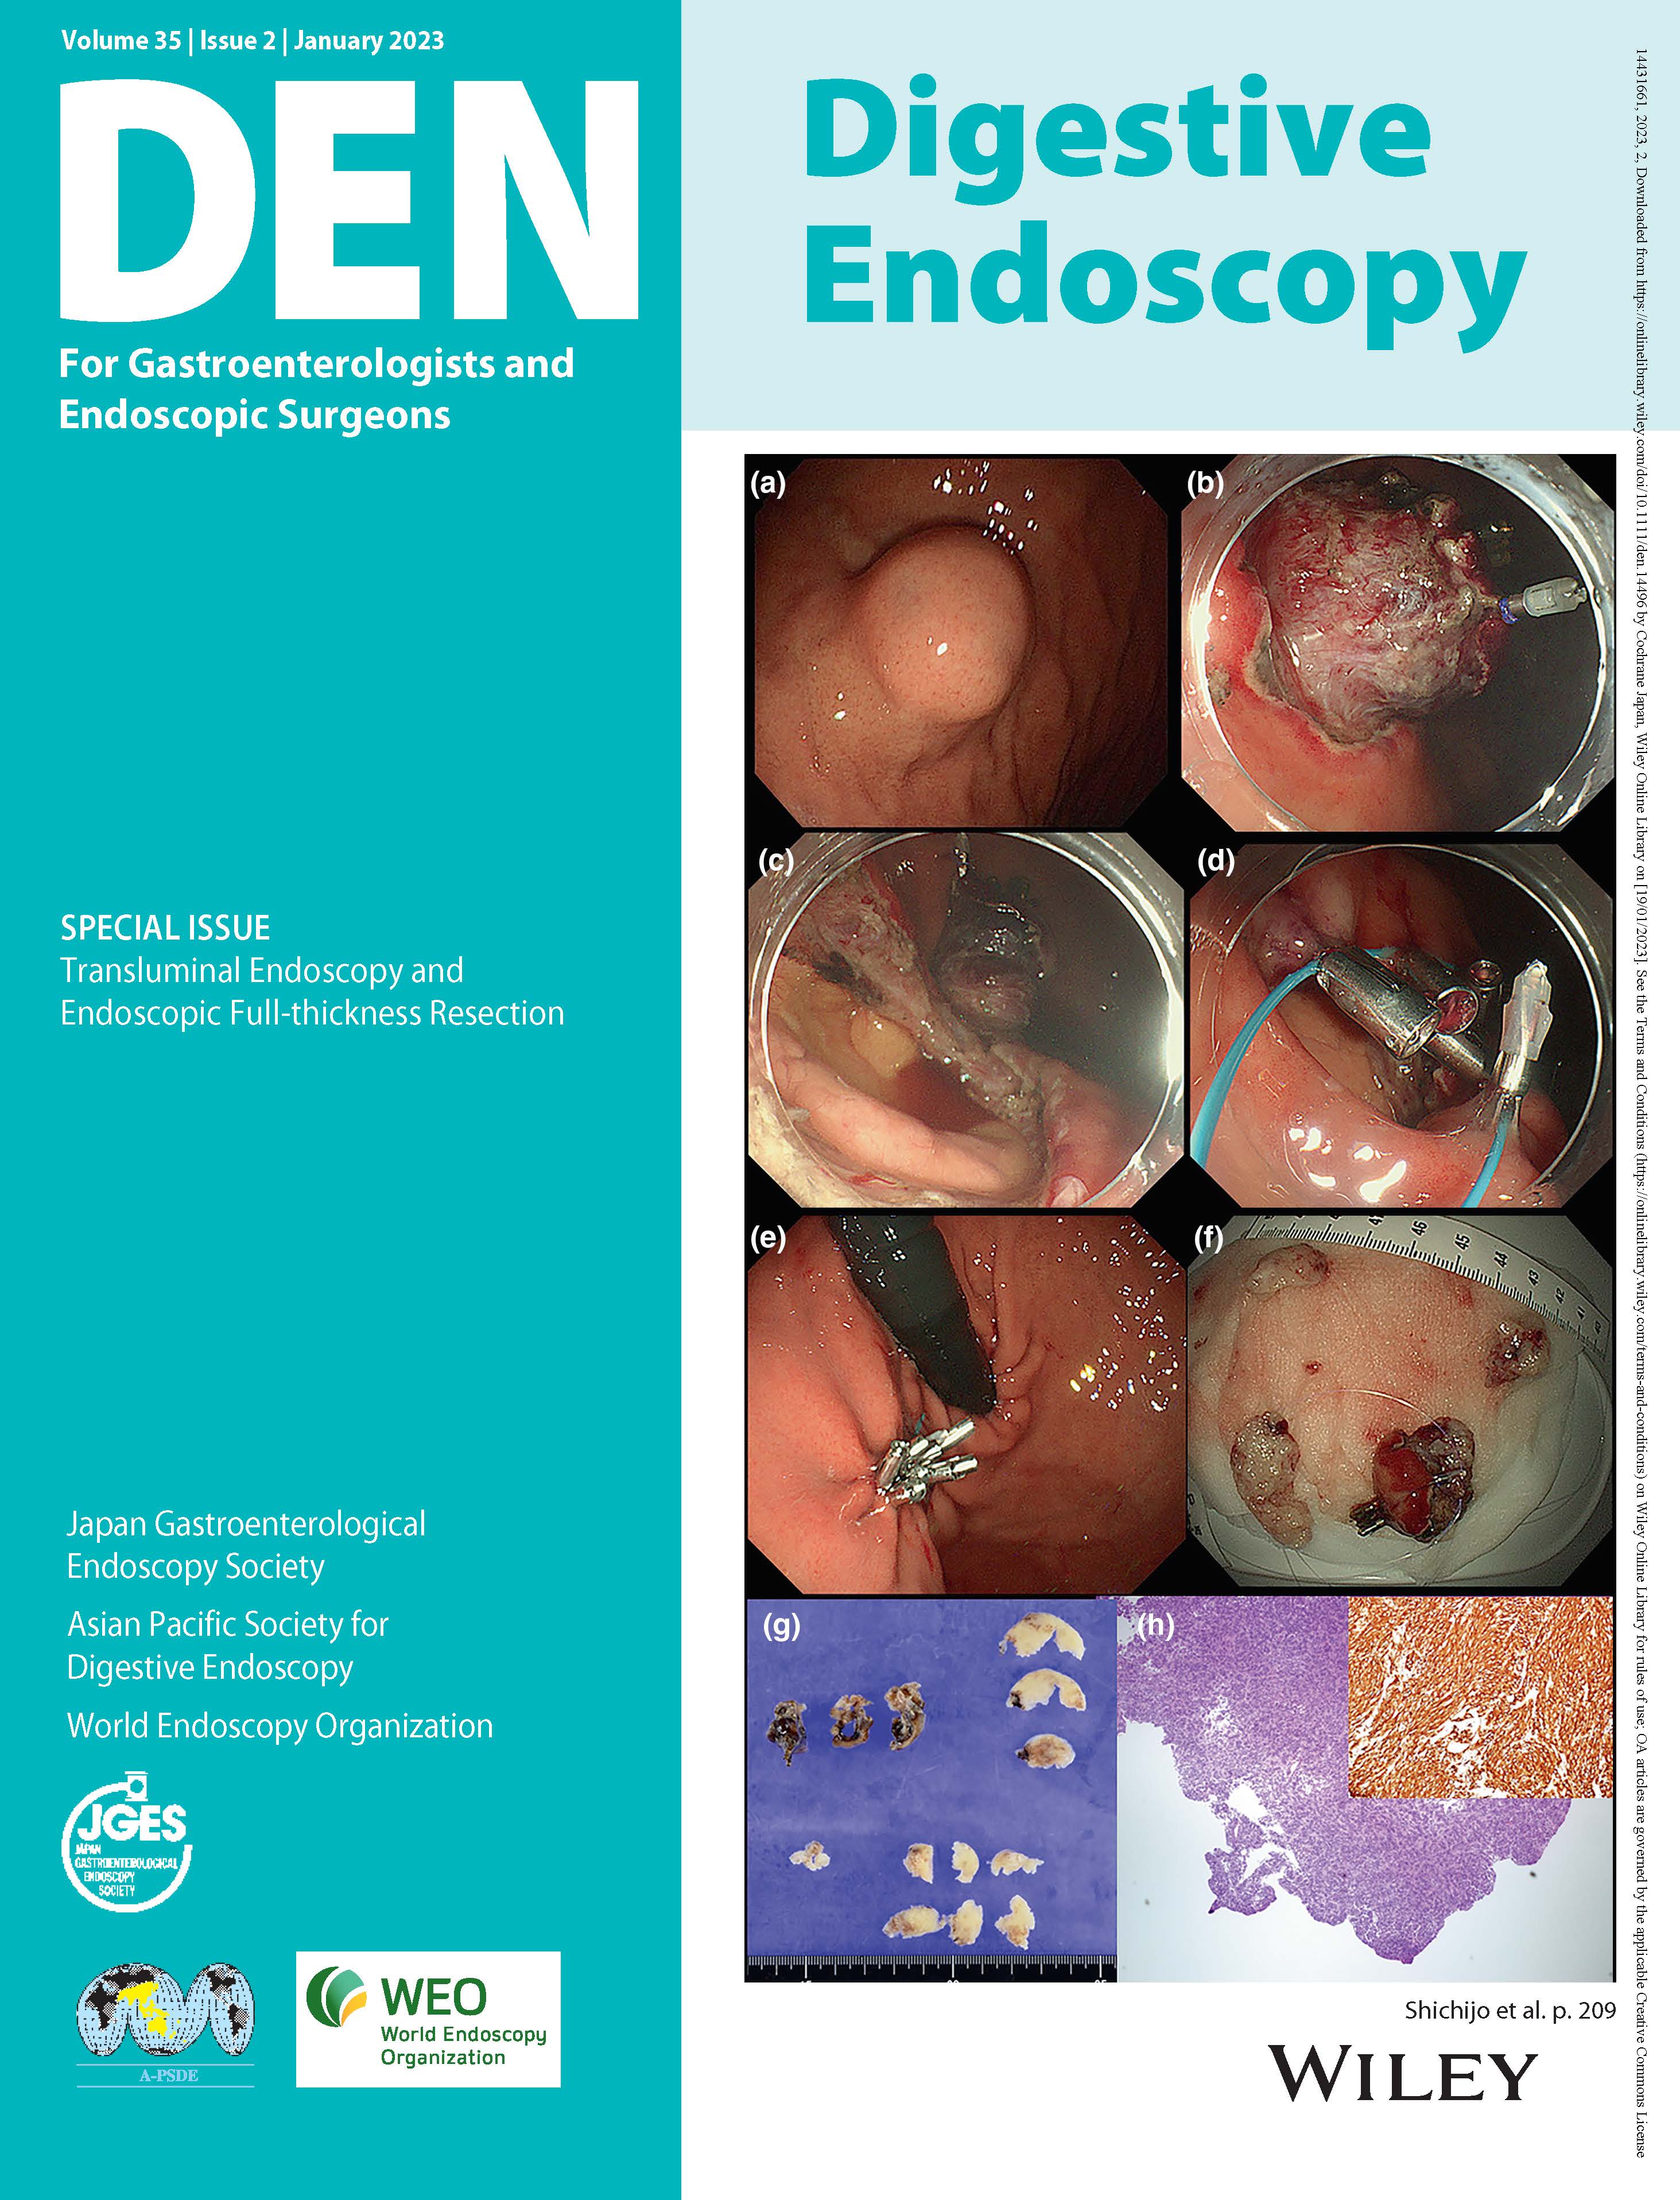 Digestive Endoscopy Vol35-2